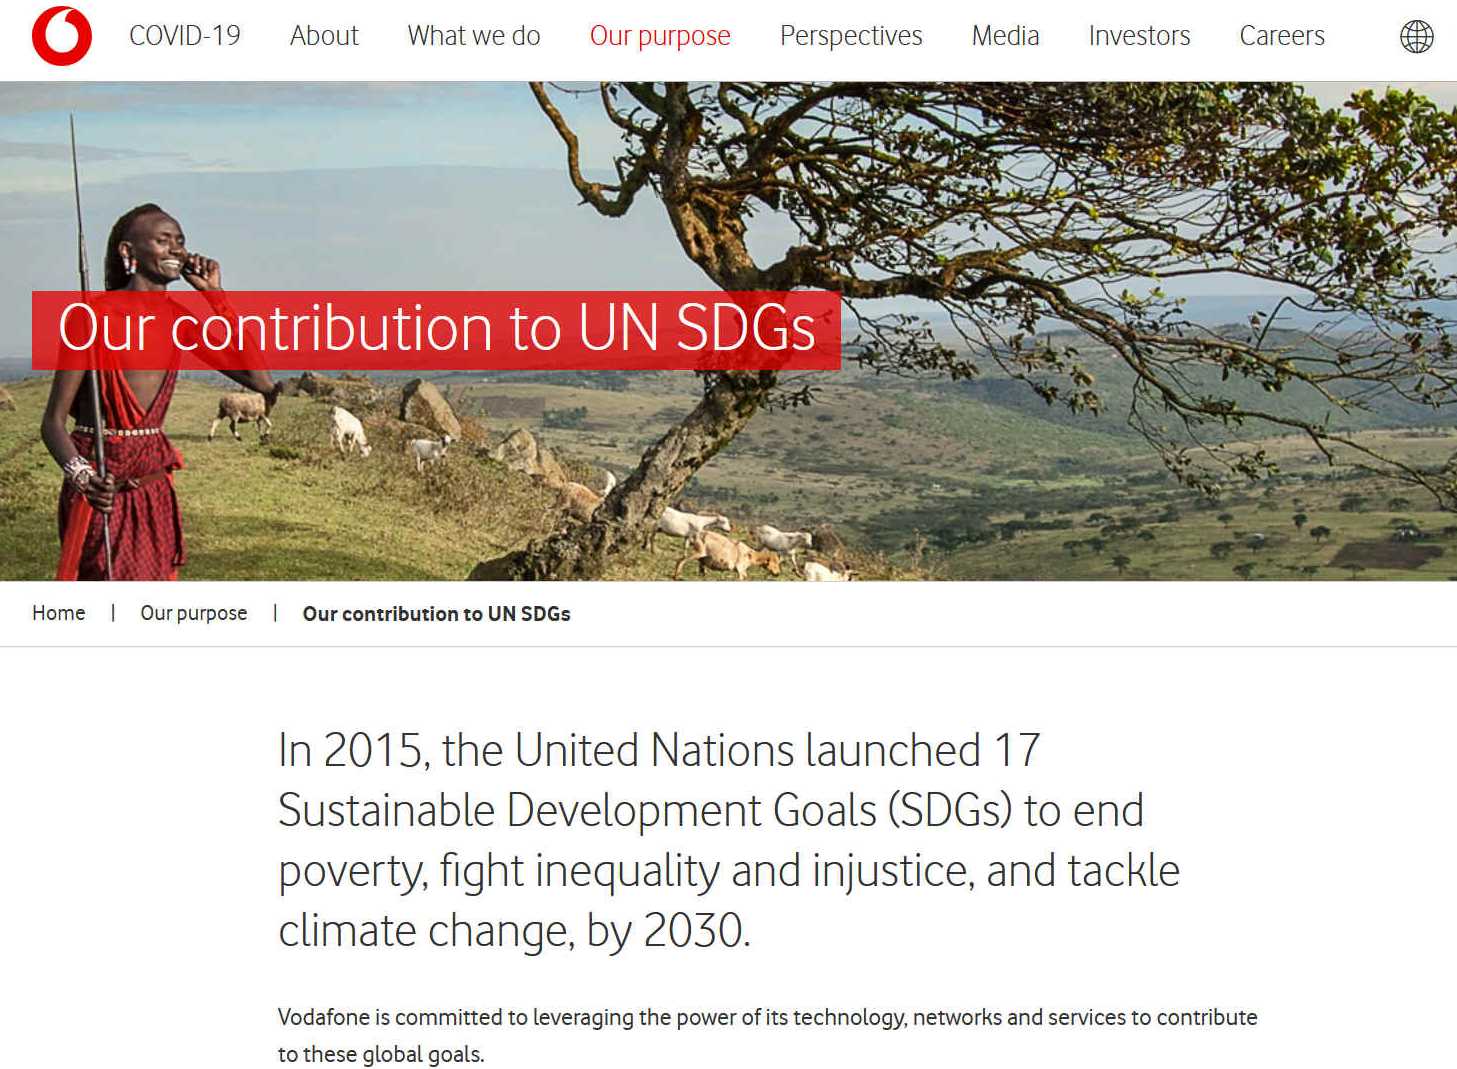 Vodafone United Nations SDGs - sustainable development goals